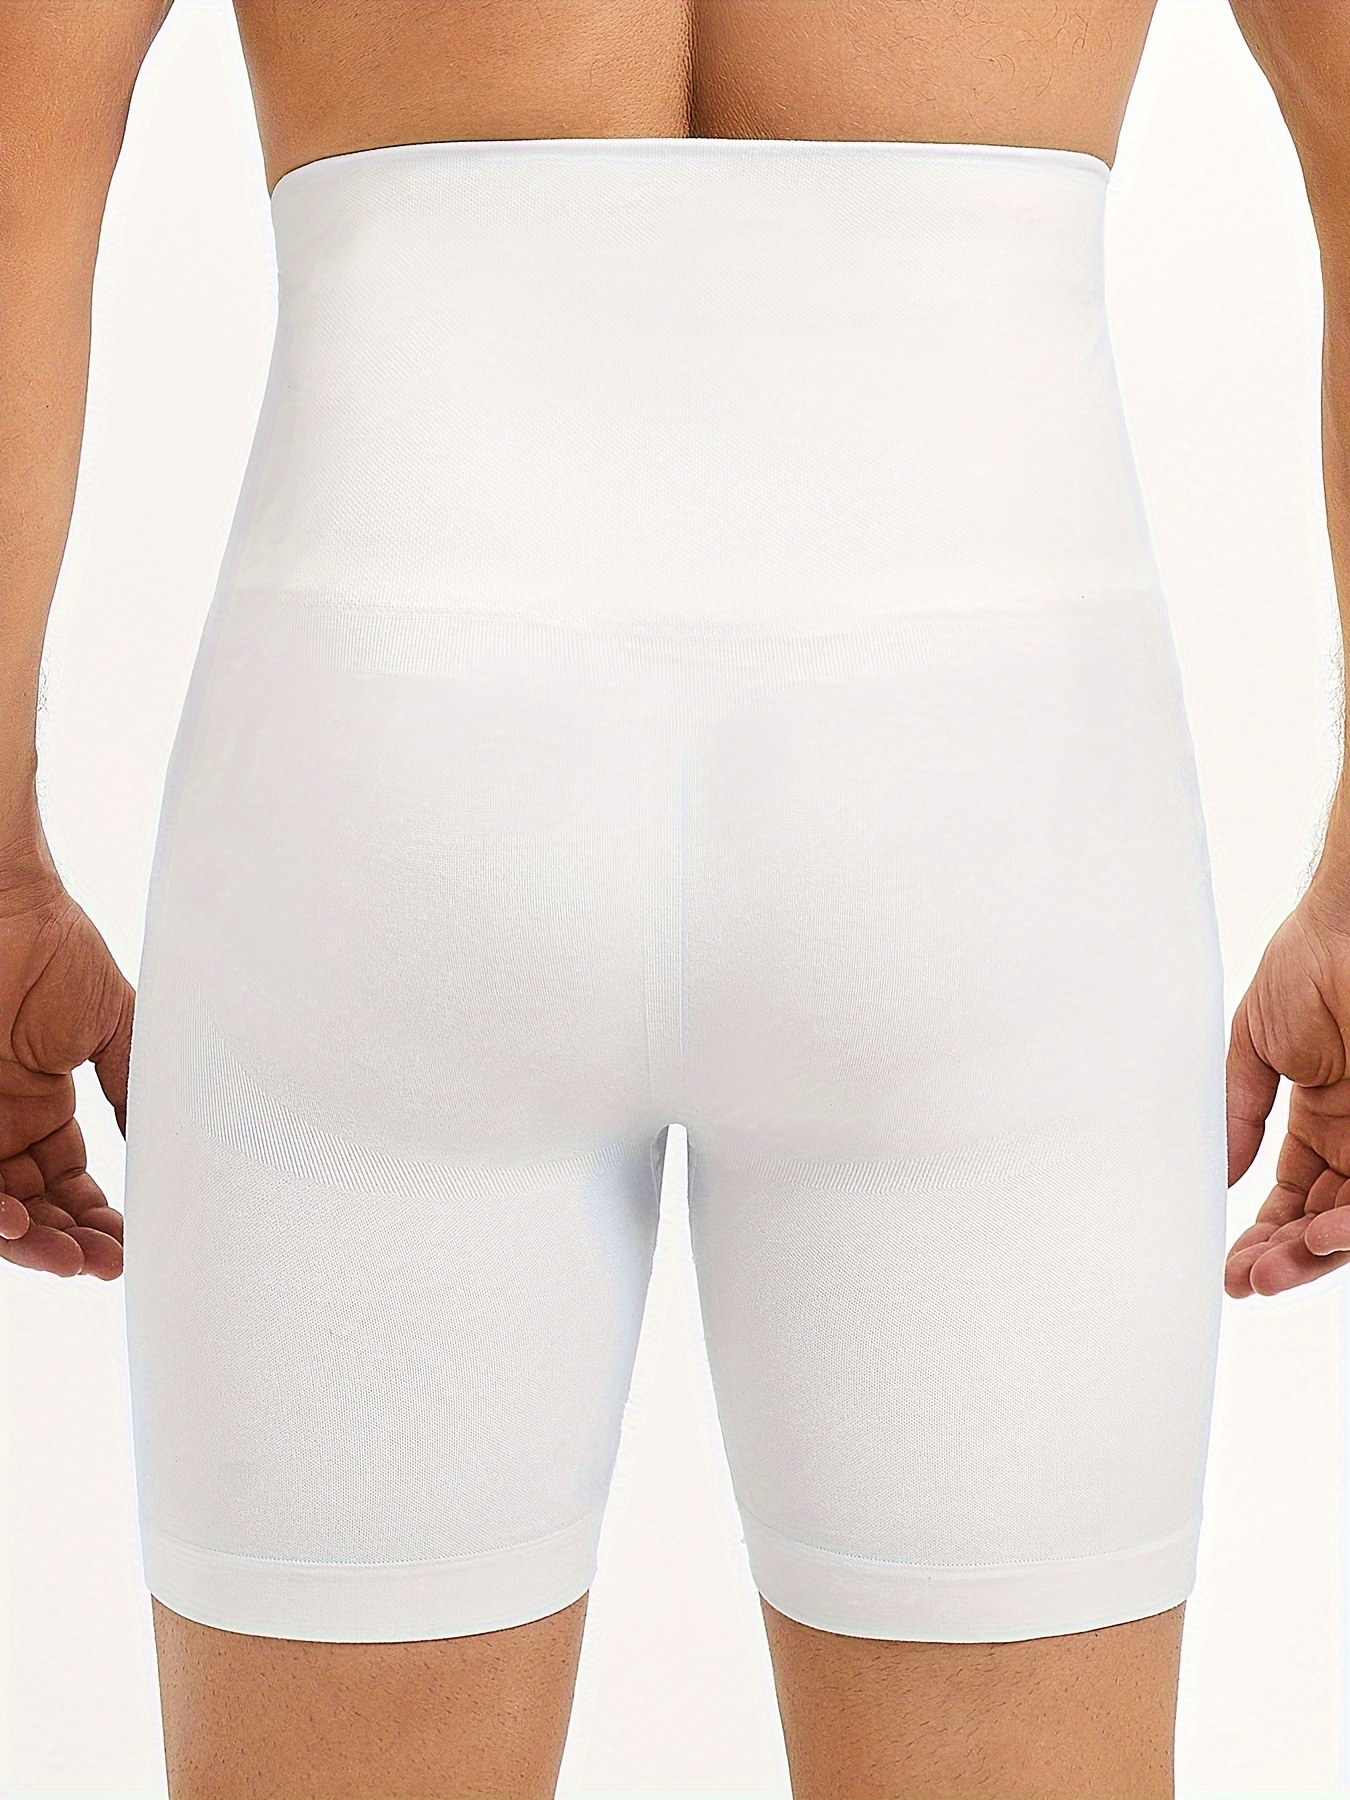 Men High Waist Tummy Belly Control Shorts Slimming Body Shaper Underwear  Pants